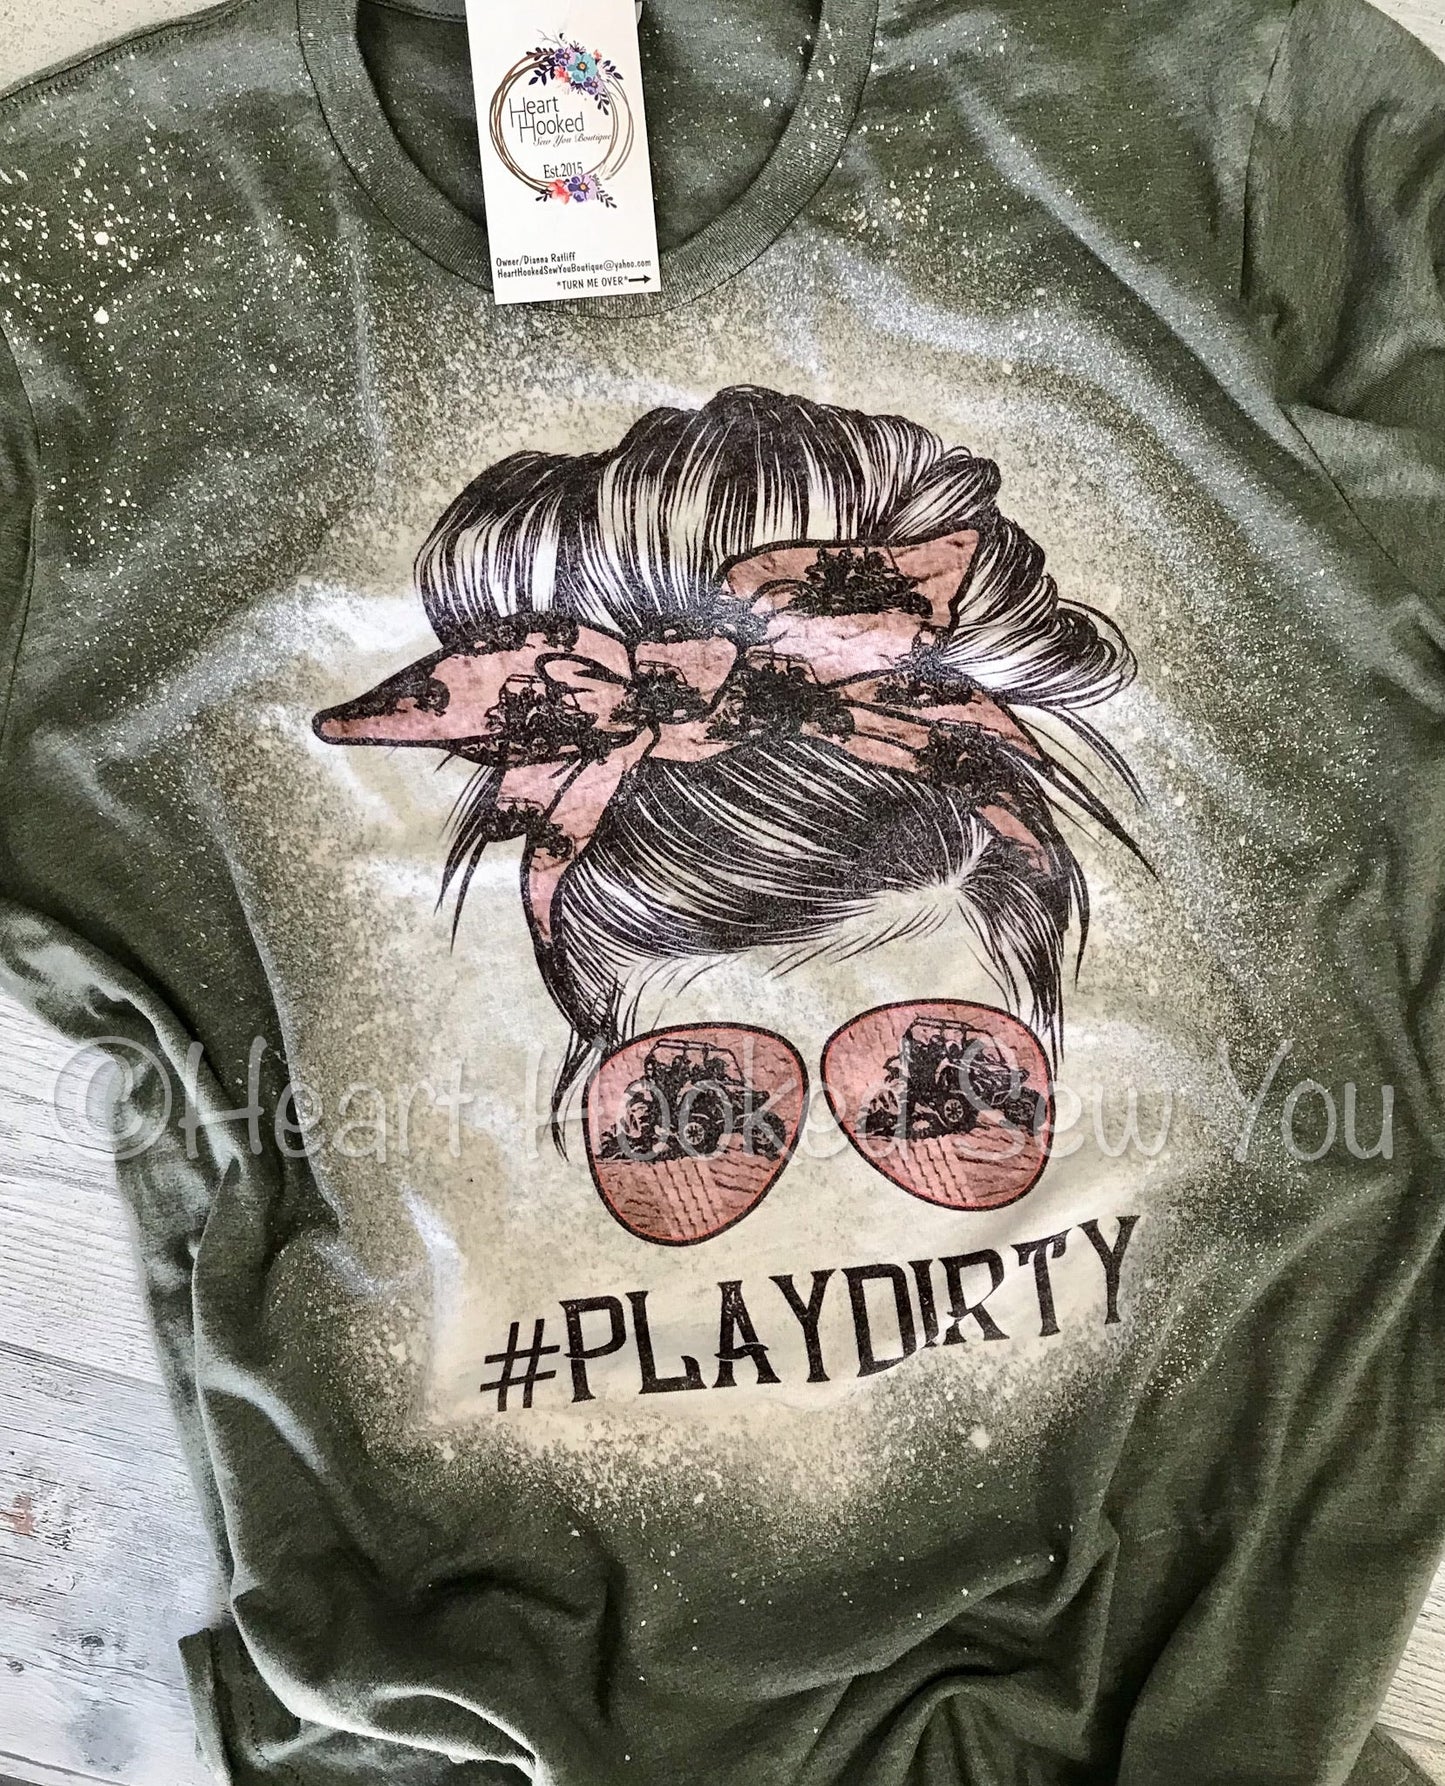 Play Dirty